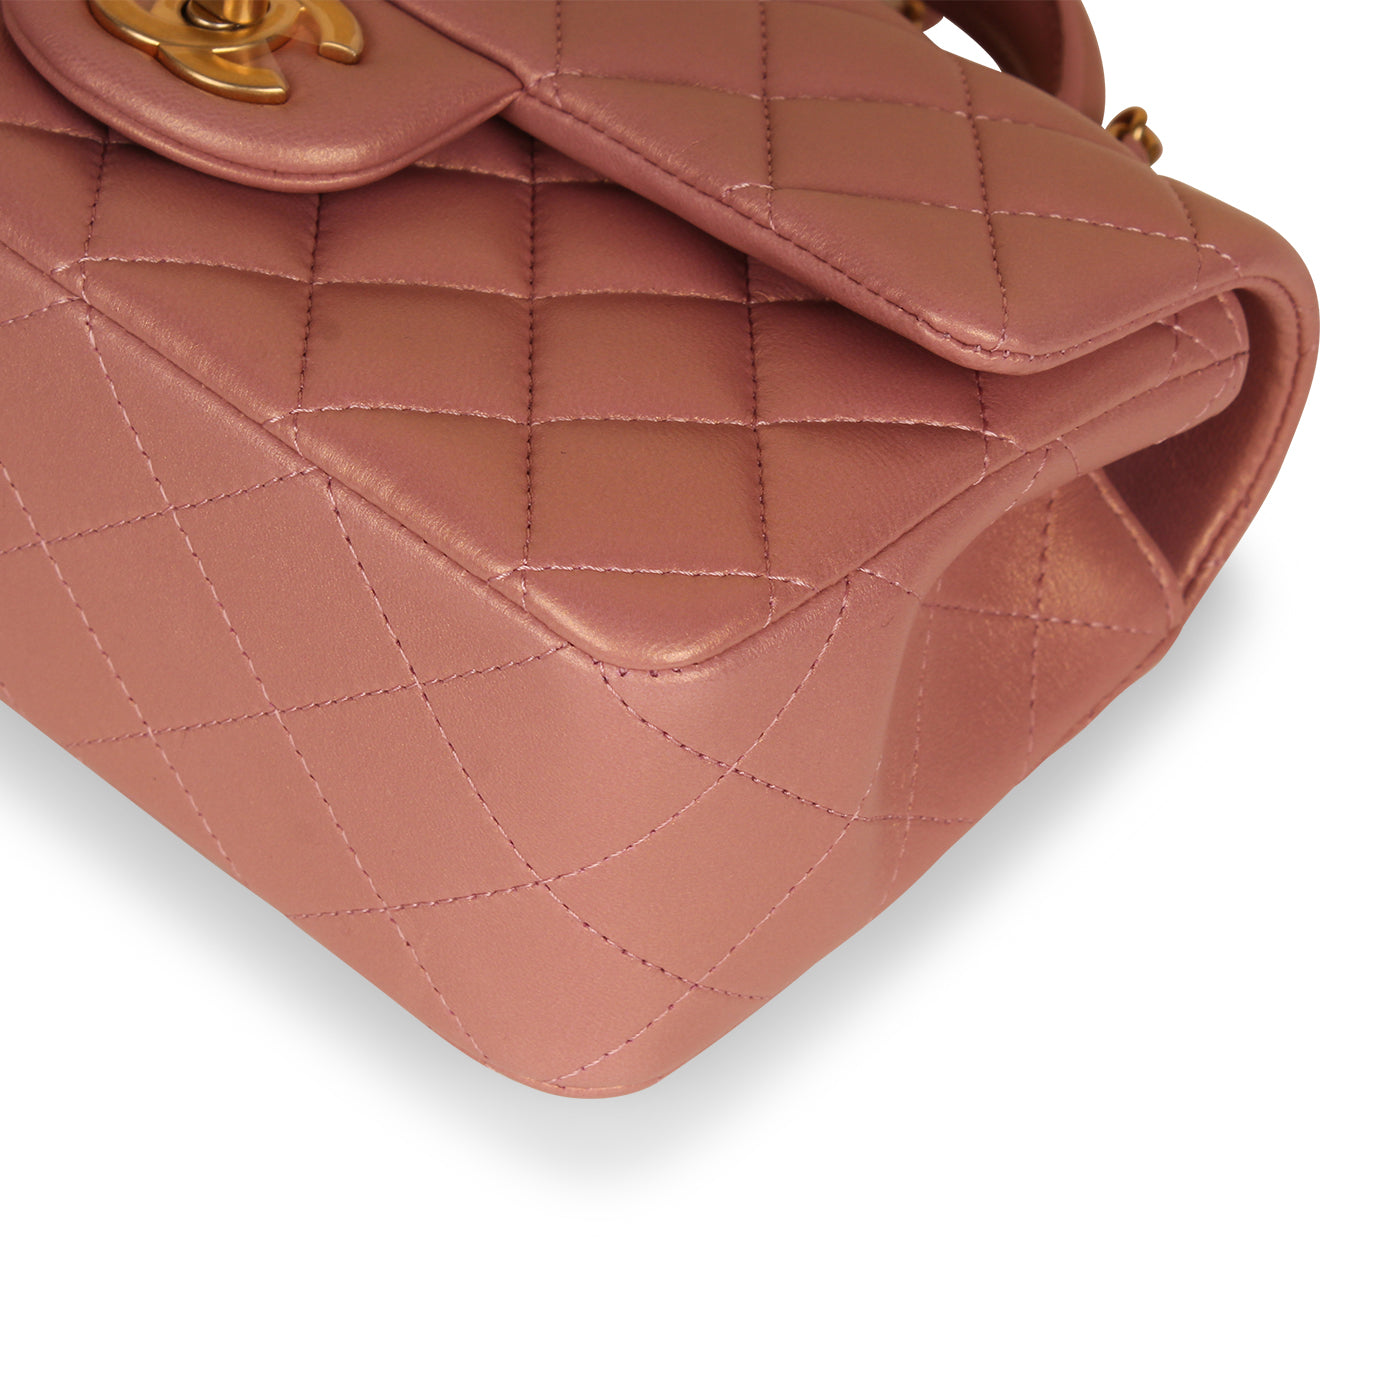 Unboxing Chanel Mini Classic Flap Bag｜VS. Mini Vanity Bag Comparison｜Mod  Shots 